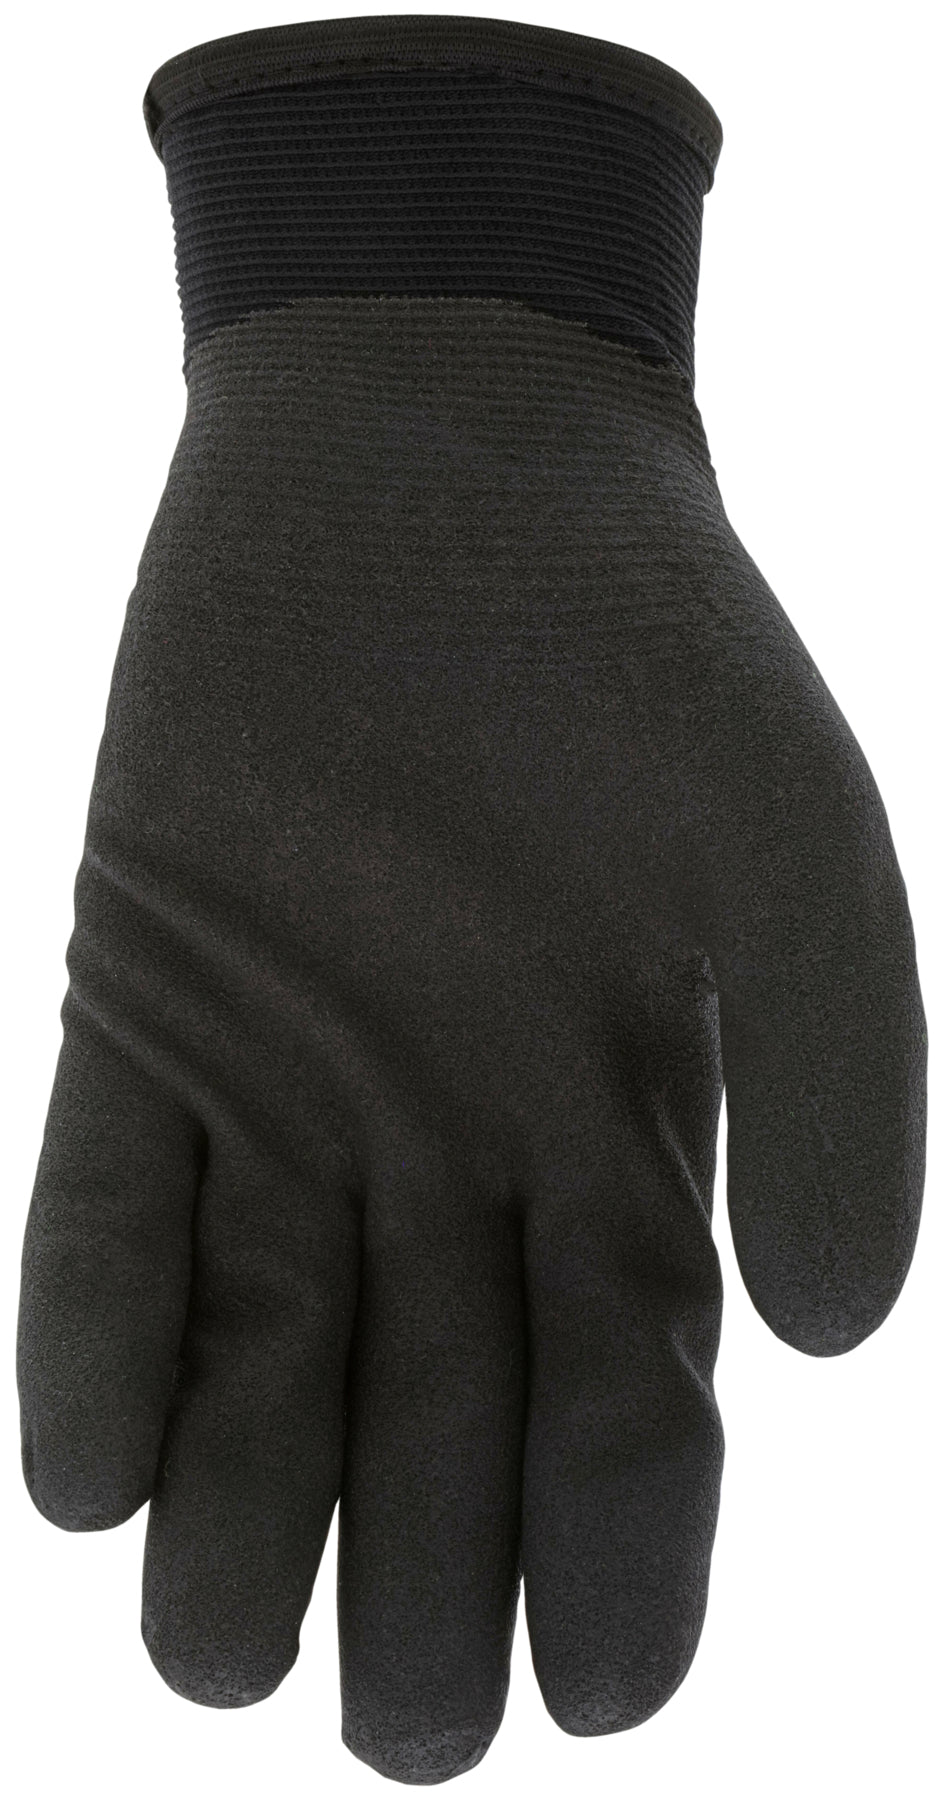 N9690FC - Ninja® Ice Insulated Winter Gloves